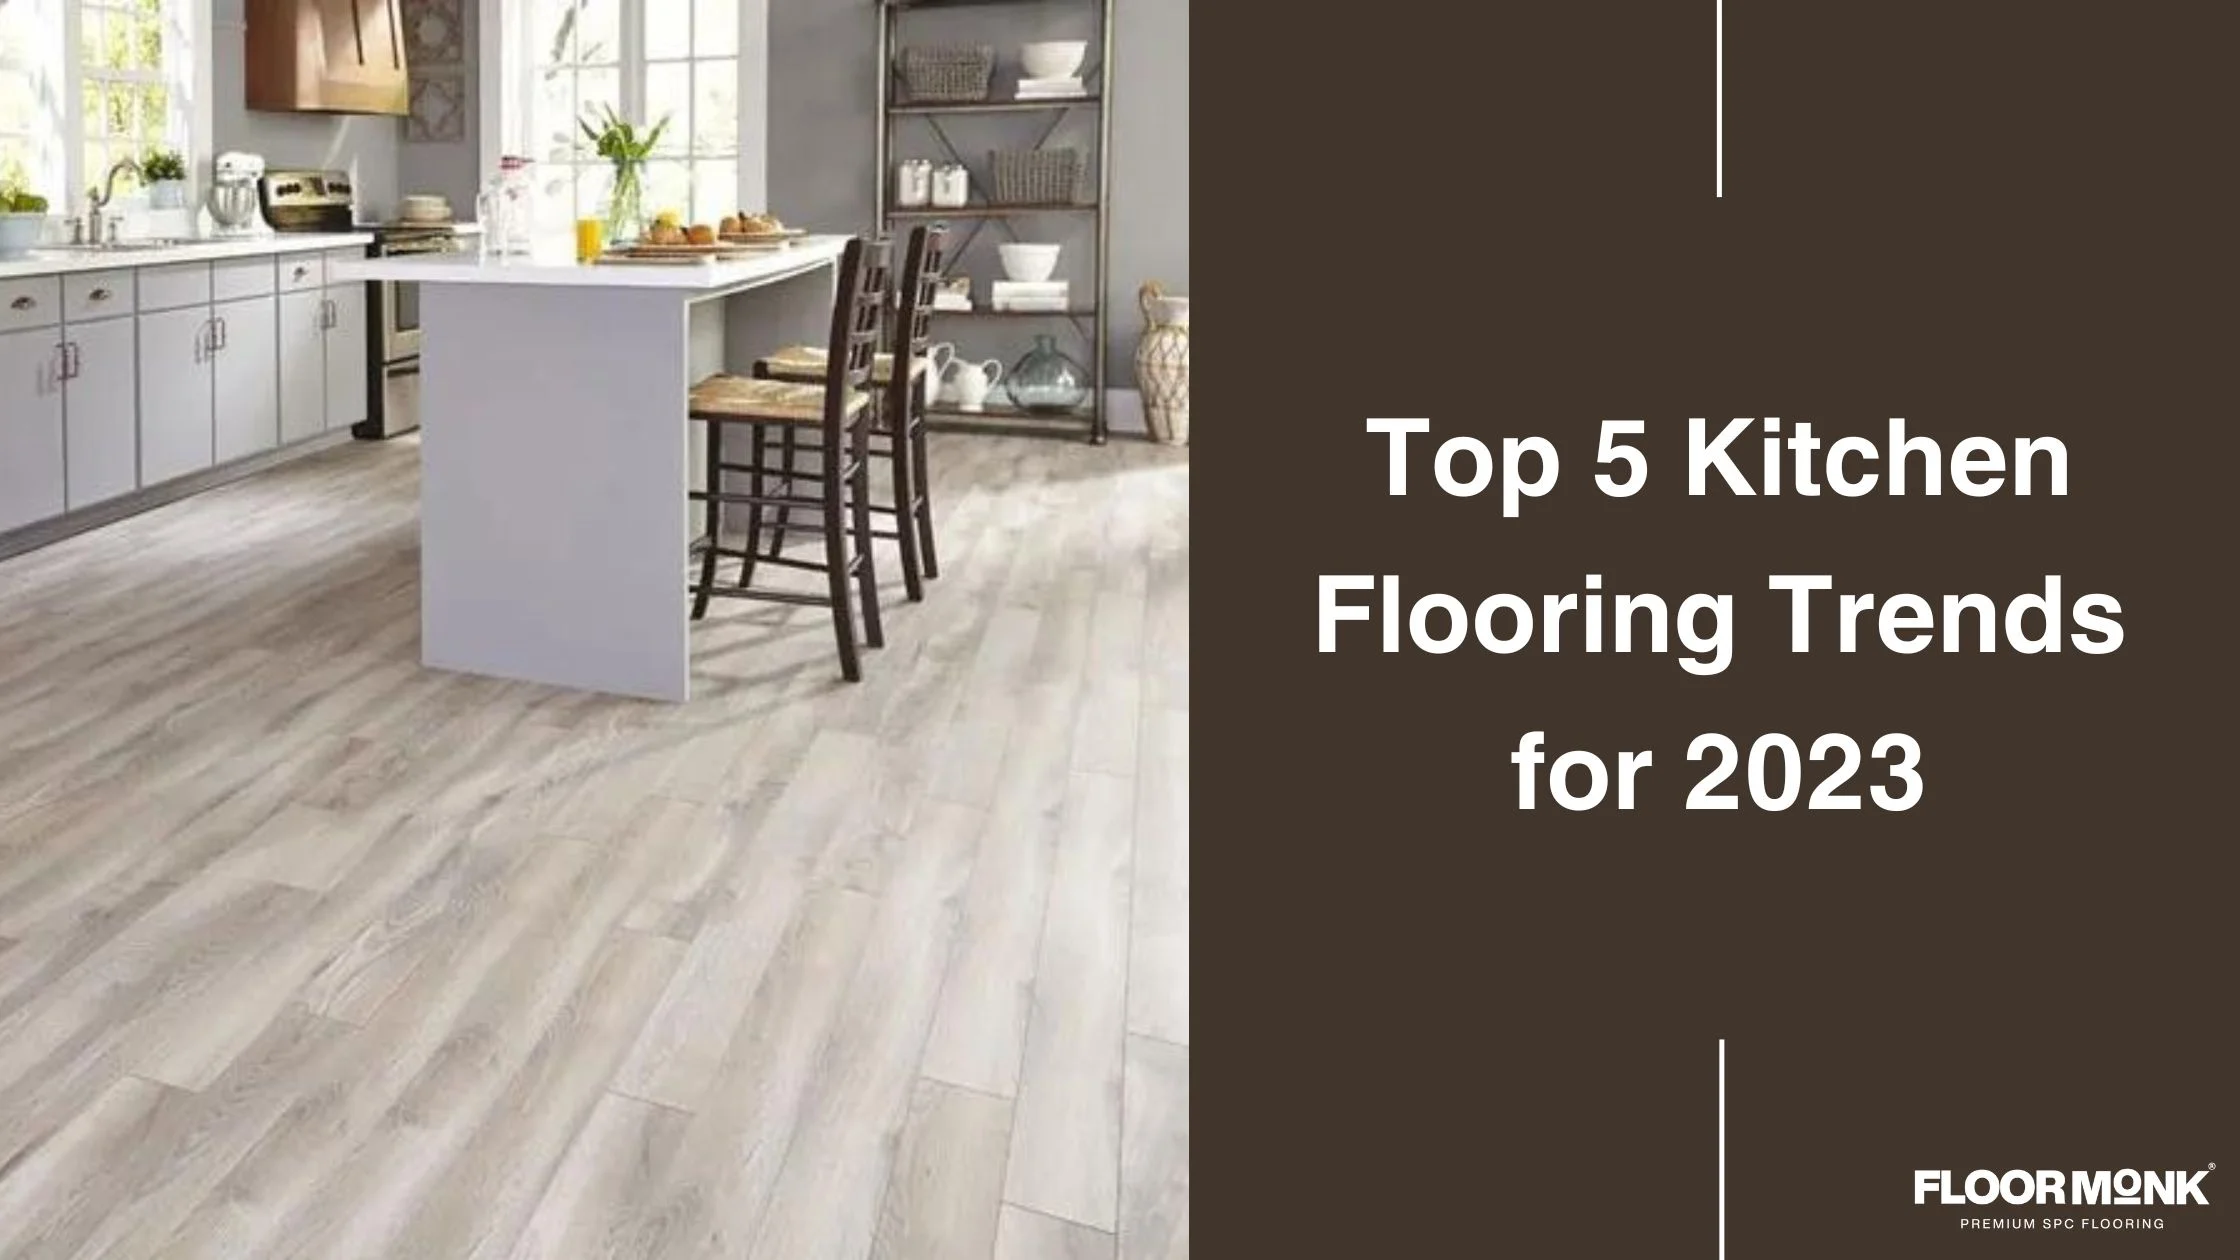 Top 5 Kitchen Flooring Trends For 2023